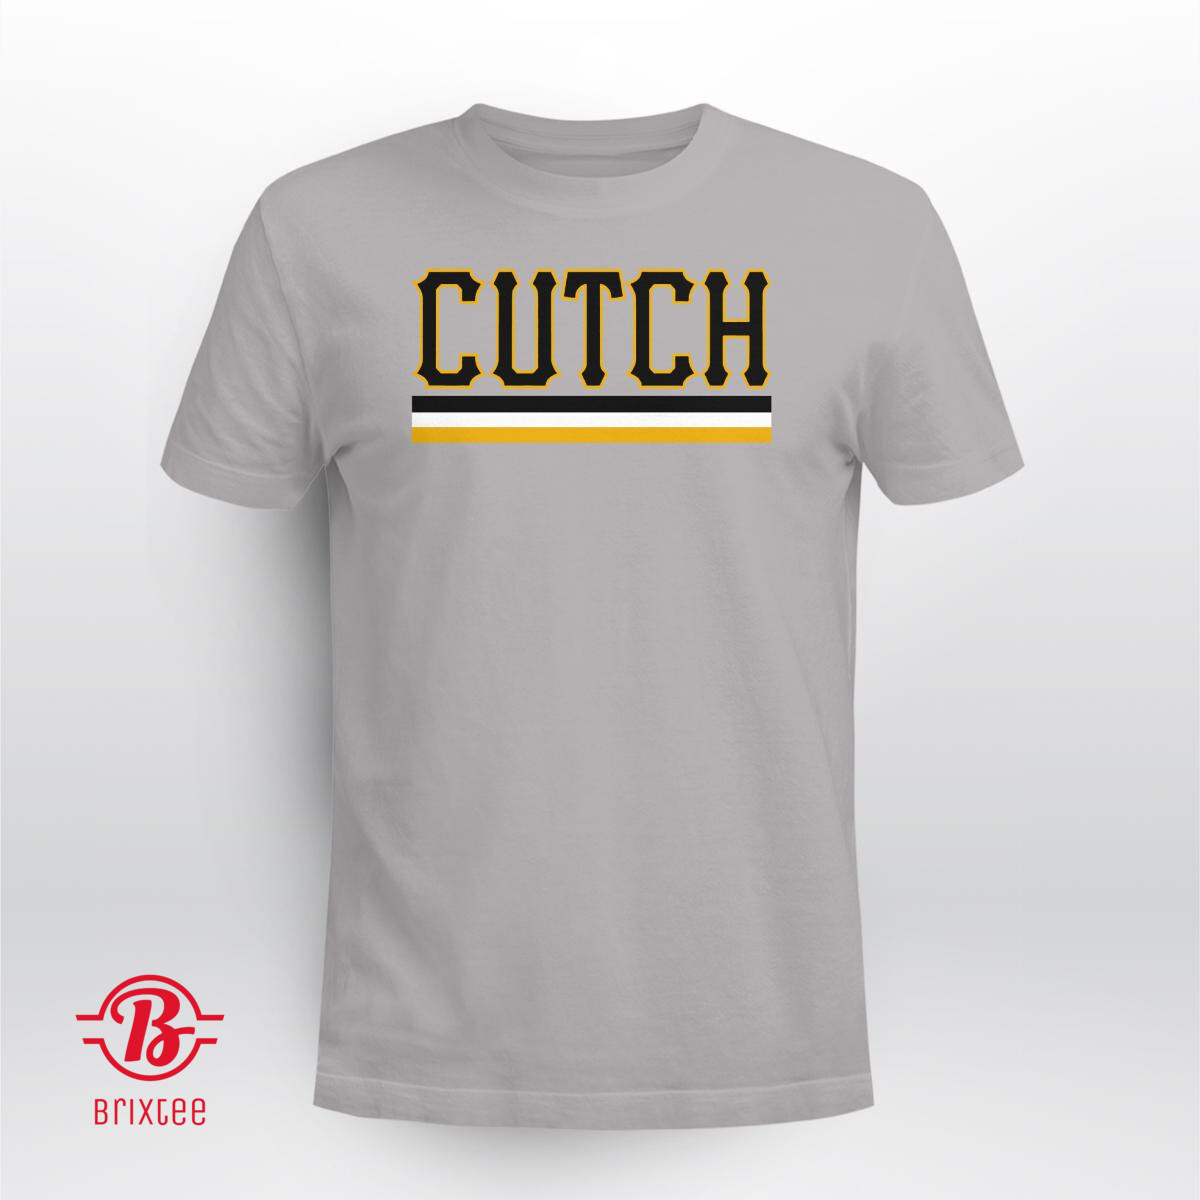 Andrew McCutchen Pittsburgh Cutch Shirt Pittsburgh Pirates